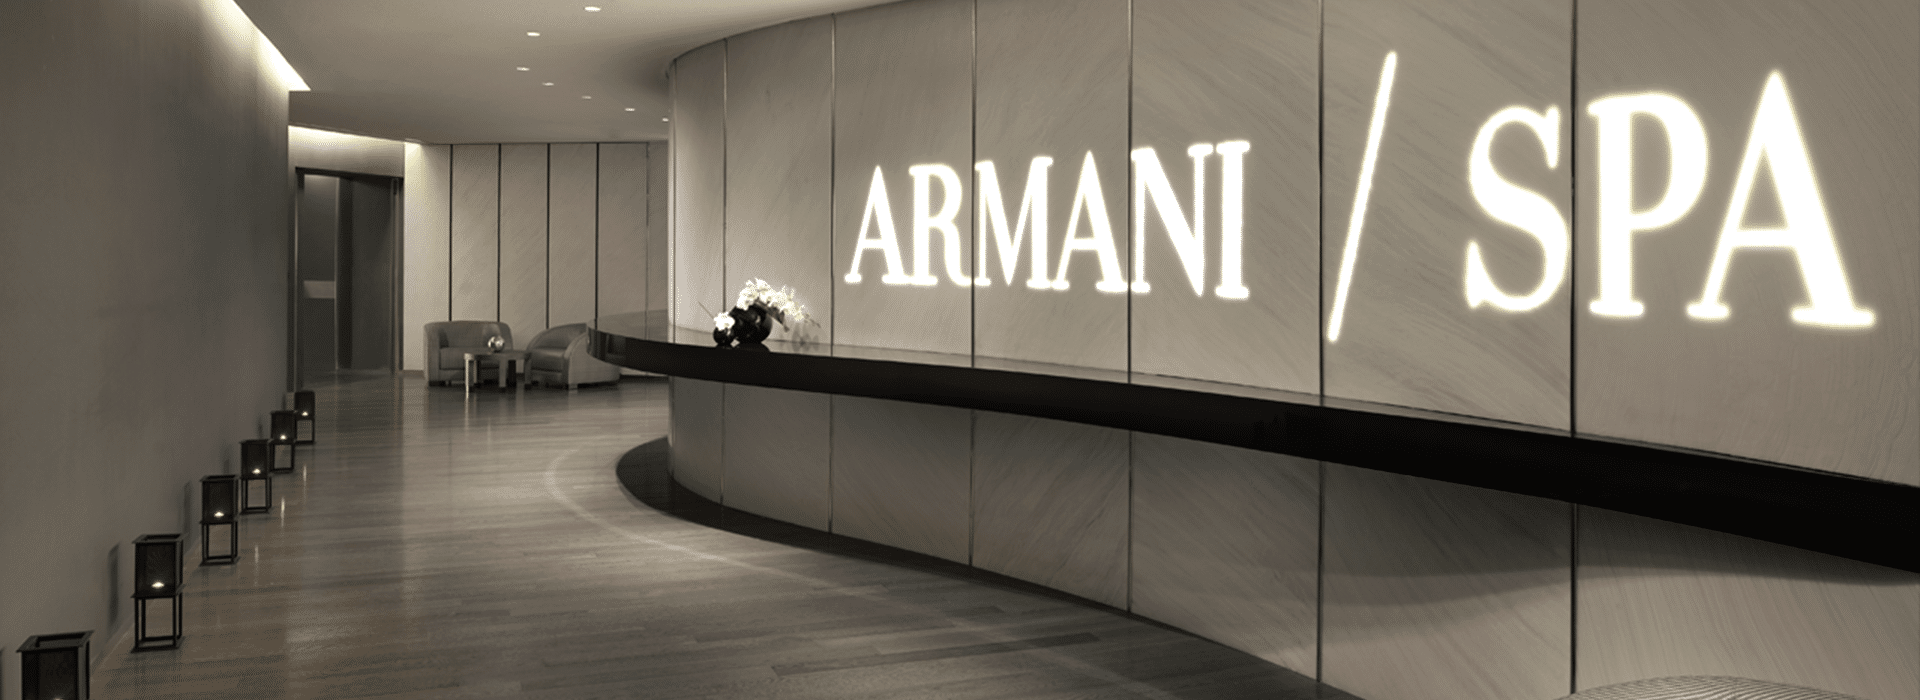 Armani/Spa - U By Emaar